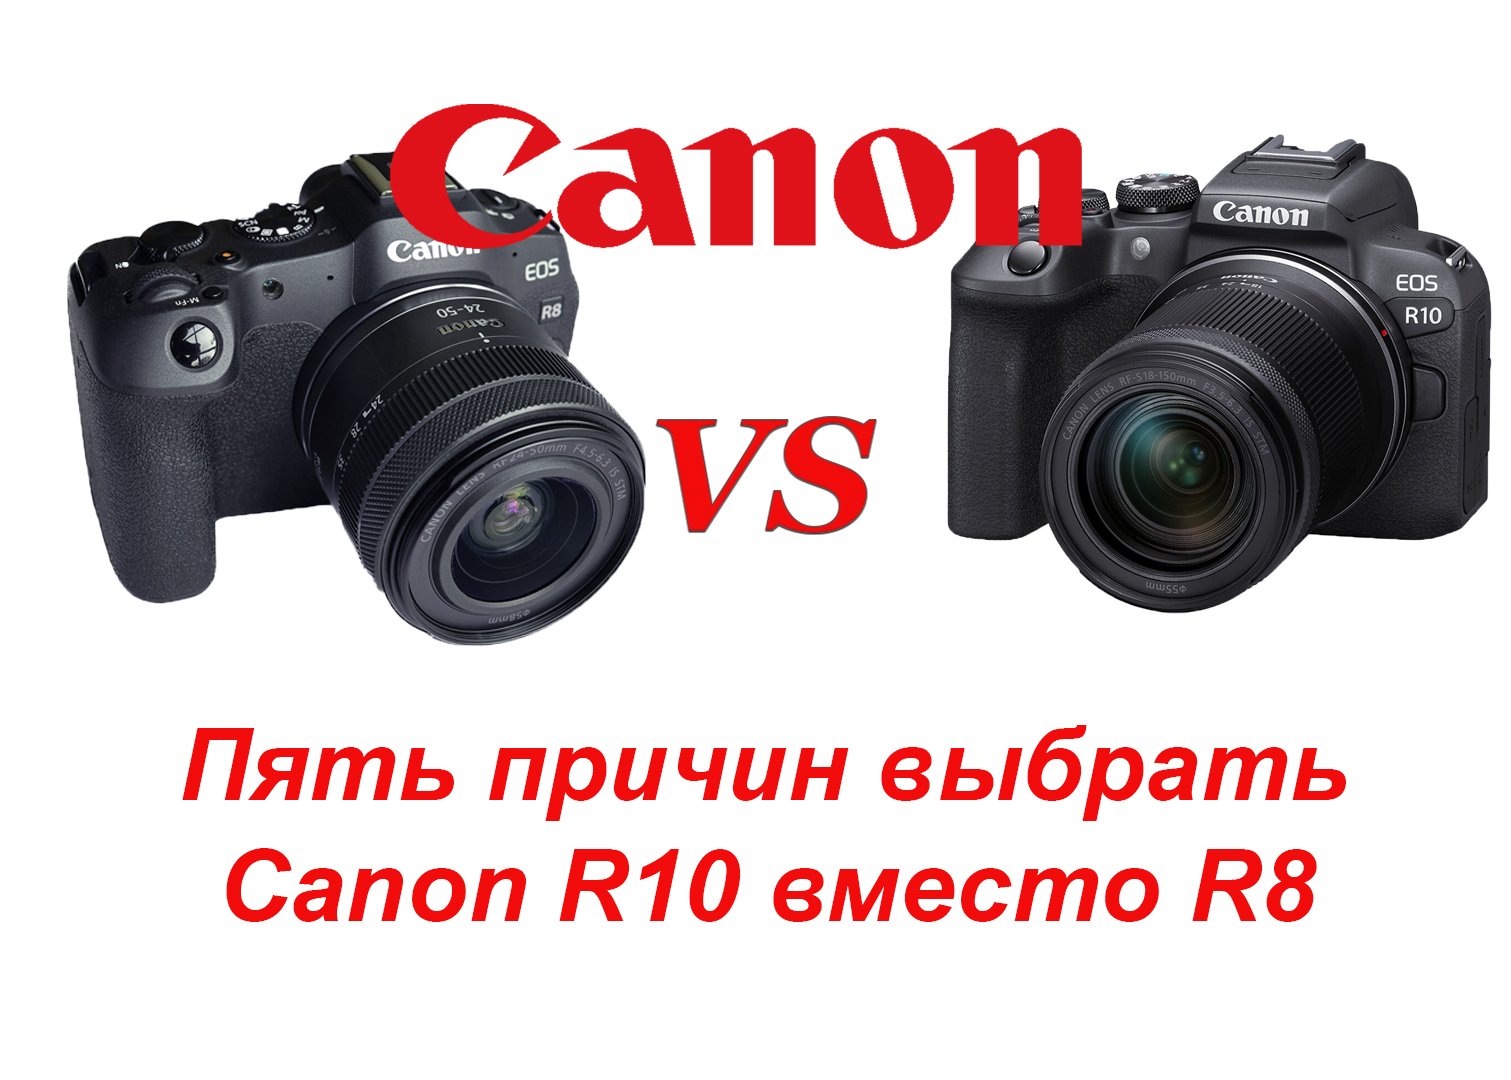 Пять причин купить Canon R10 вместо R8